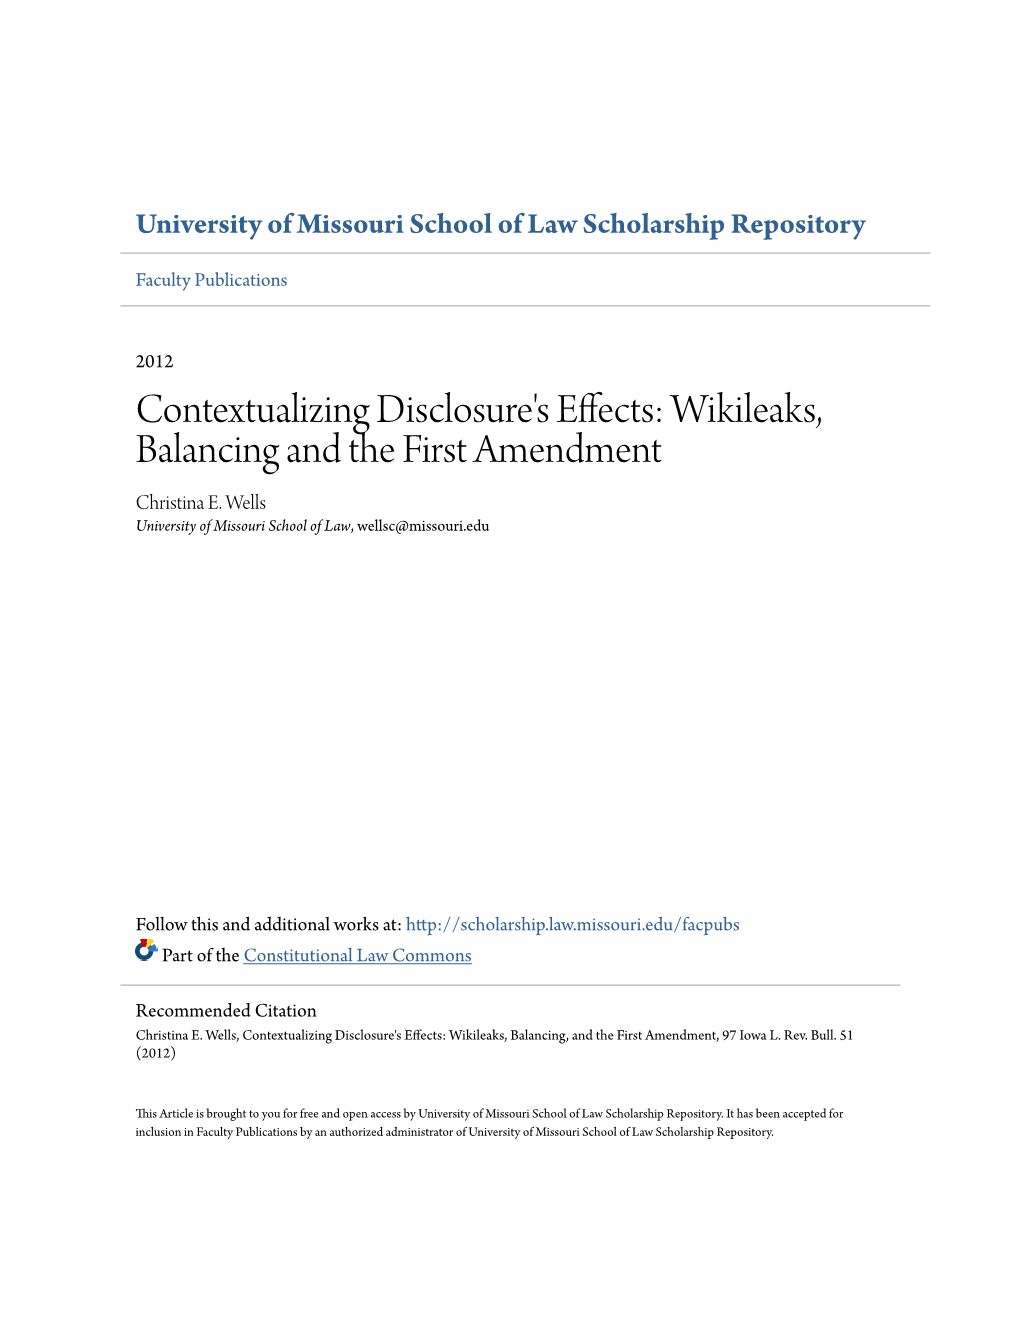 Wikileaks, Balancing and the First Amendment Christina E